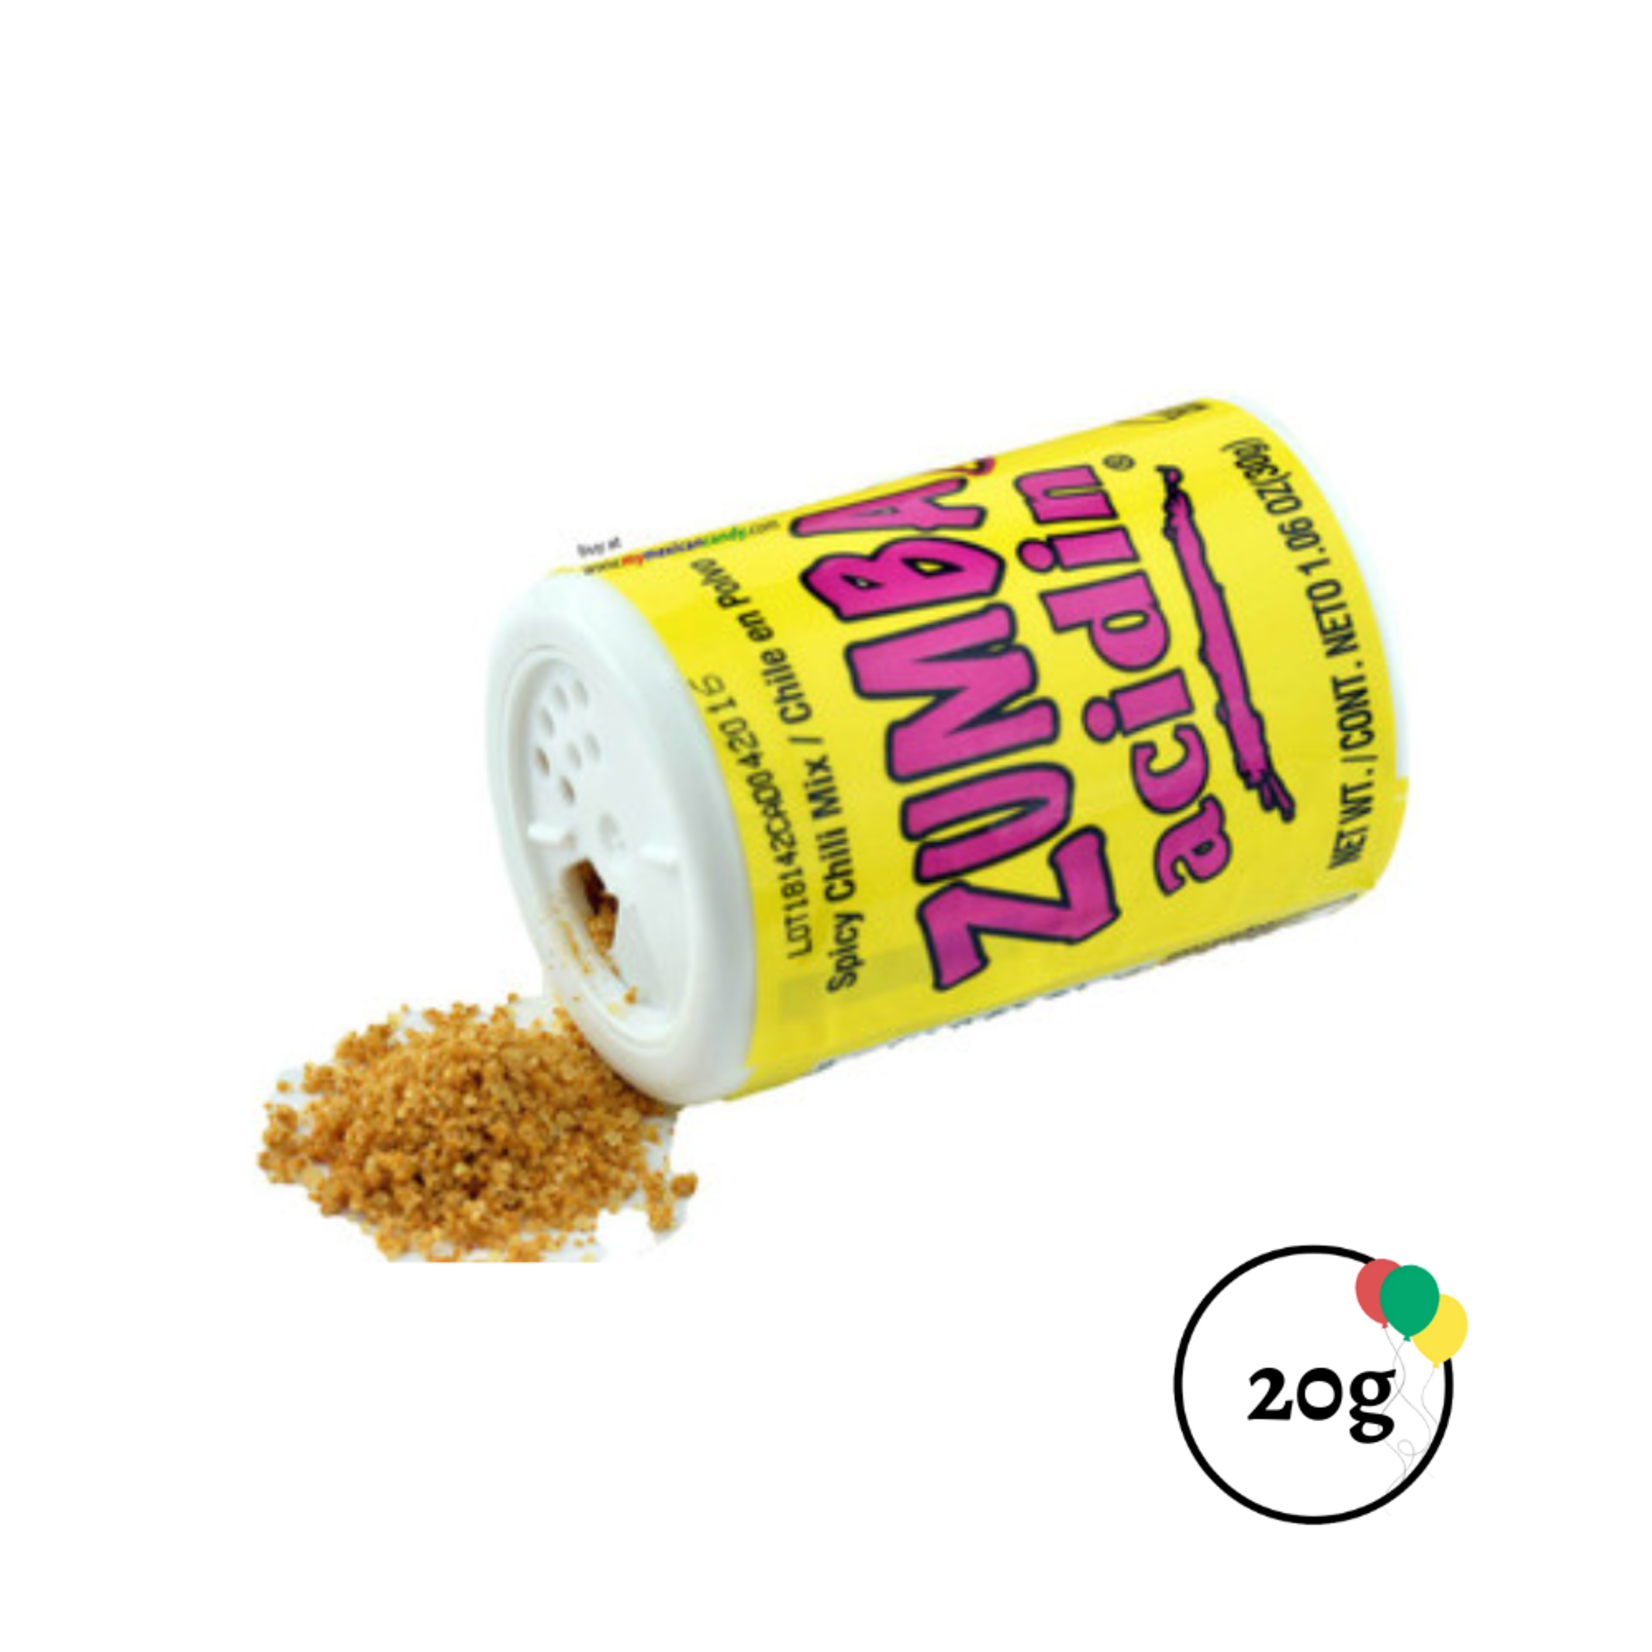 Zumba Pica Zumba Powder Acidin 10ct.